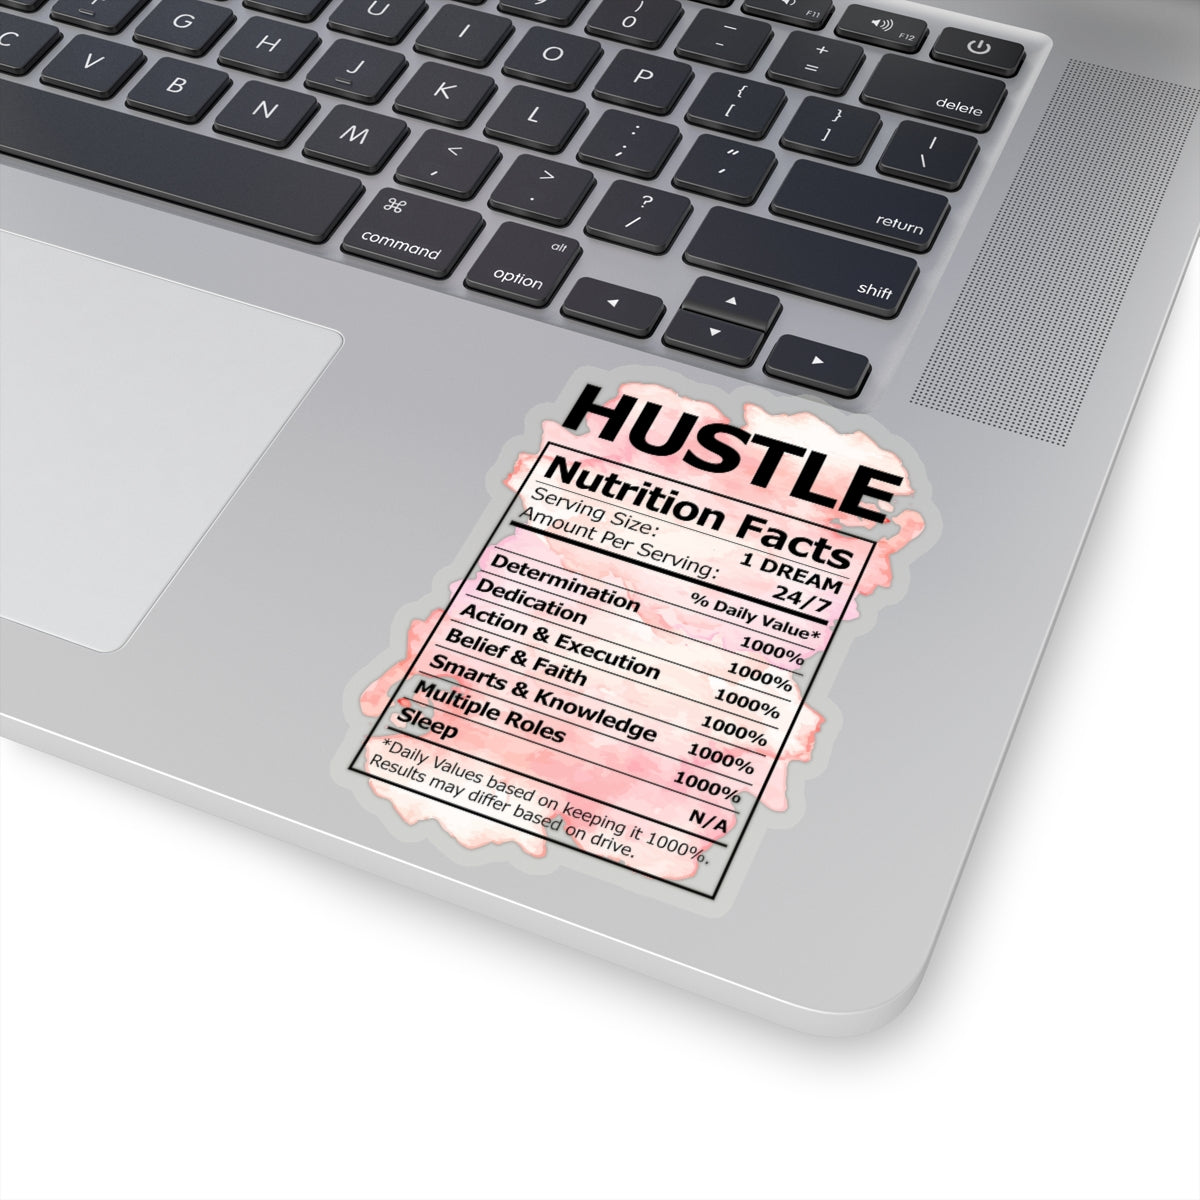 Hustle Nutrition Facts Sticker